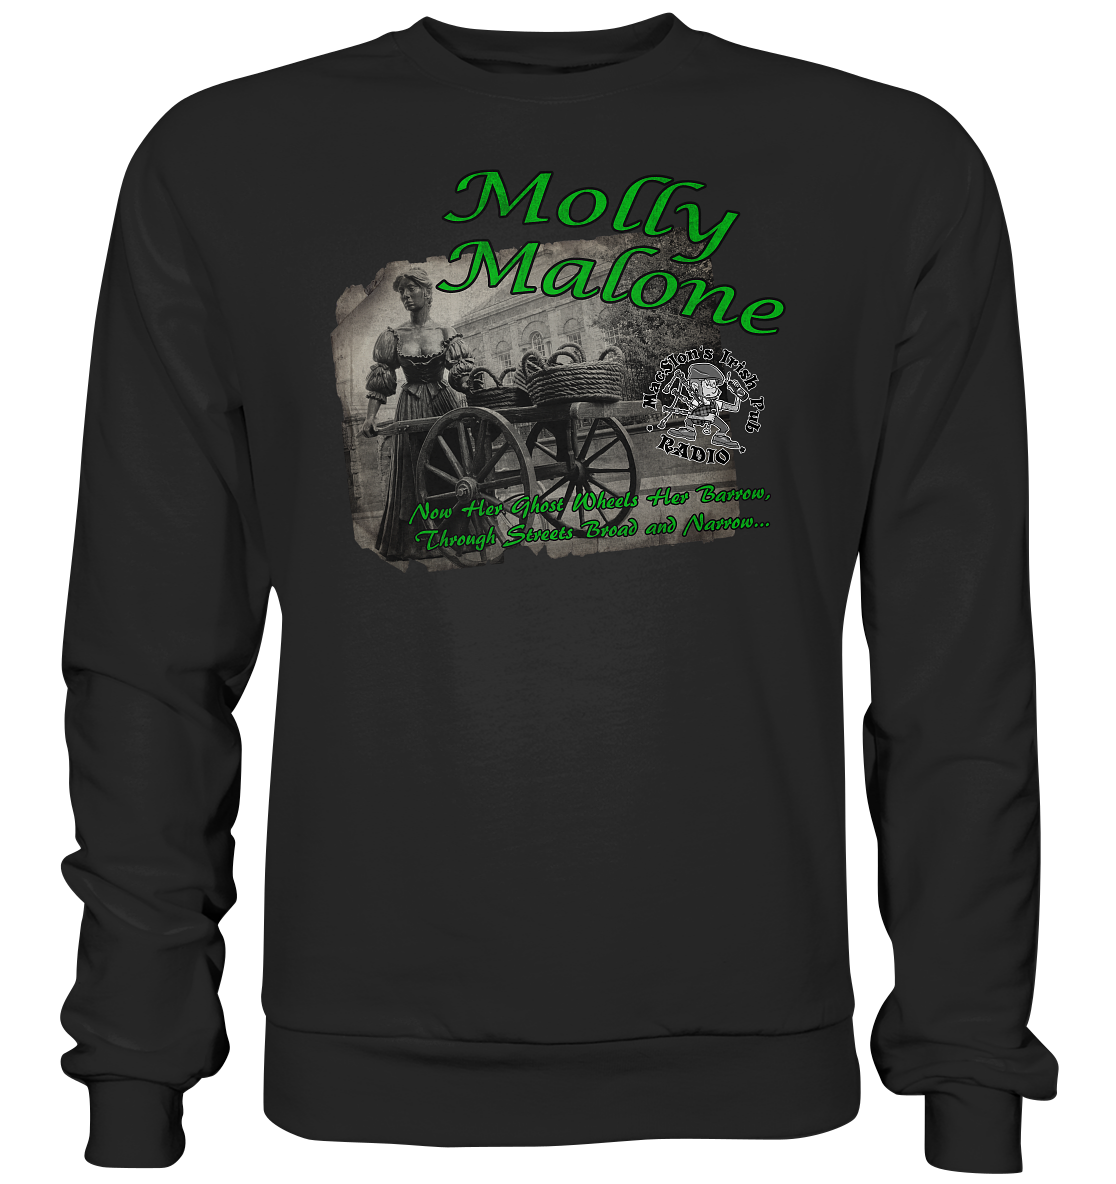 MacSlon's "Molly Malone" - Premium Sweatshirt